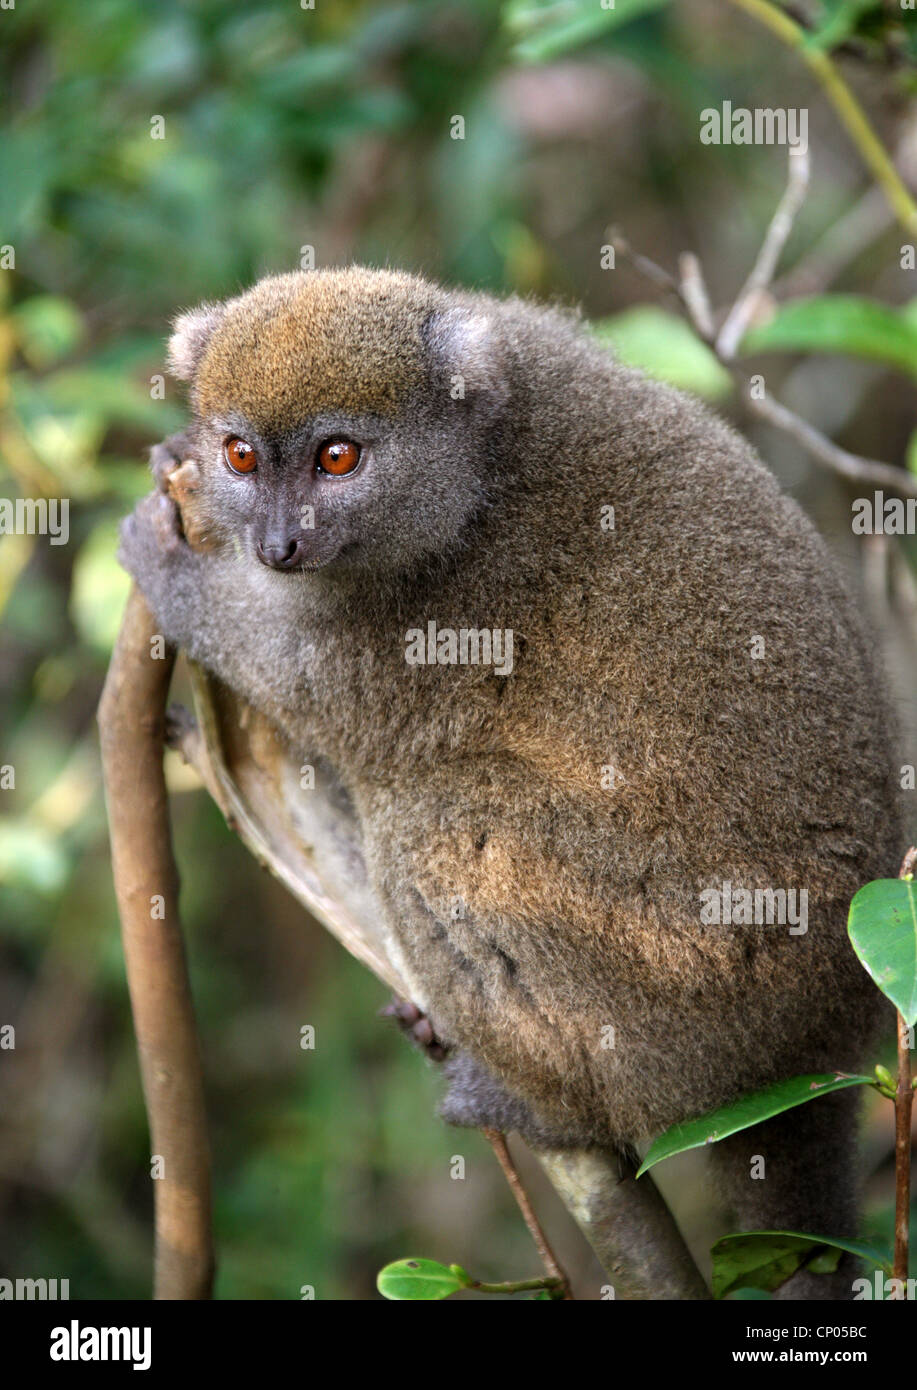 Eastern Lesser Bamboo Lemur, Hapalemur griseus, Lemuridae, Primates. Vakona Forest Lodge Reserve, Andasibe, Madagascar, Africa. Stock Photo